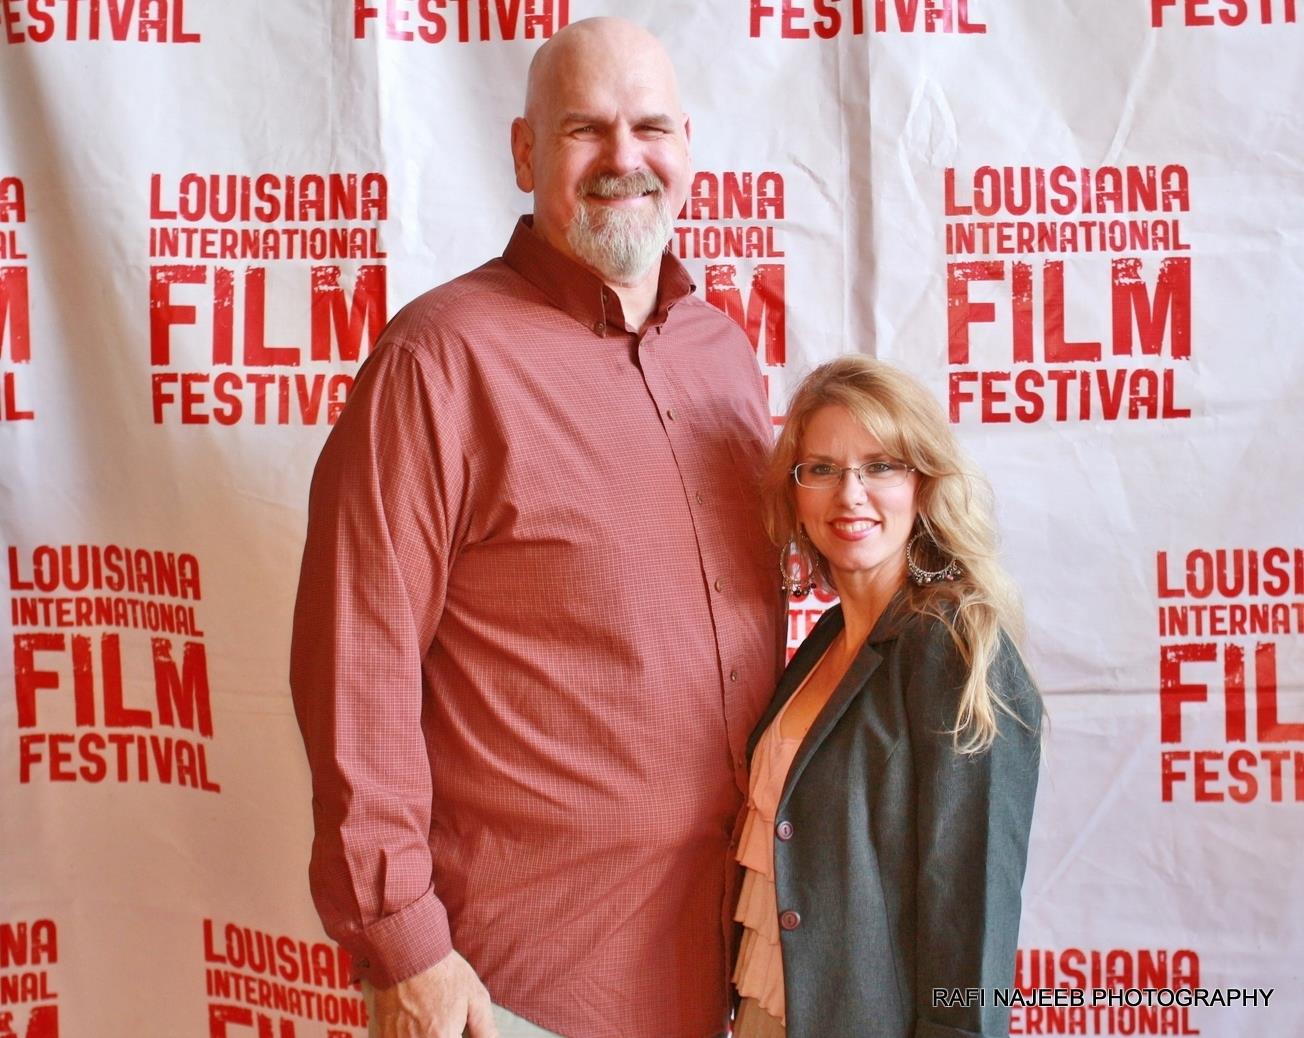 Chuck Bush and his wife, Angie at the Louisiana International Film Festival screening of Boyhood.